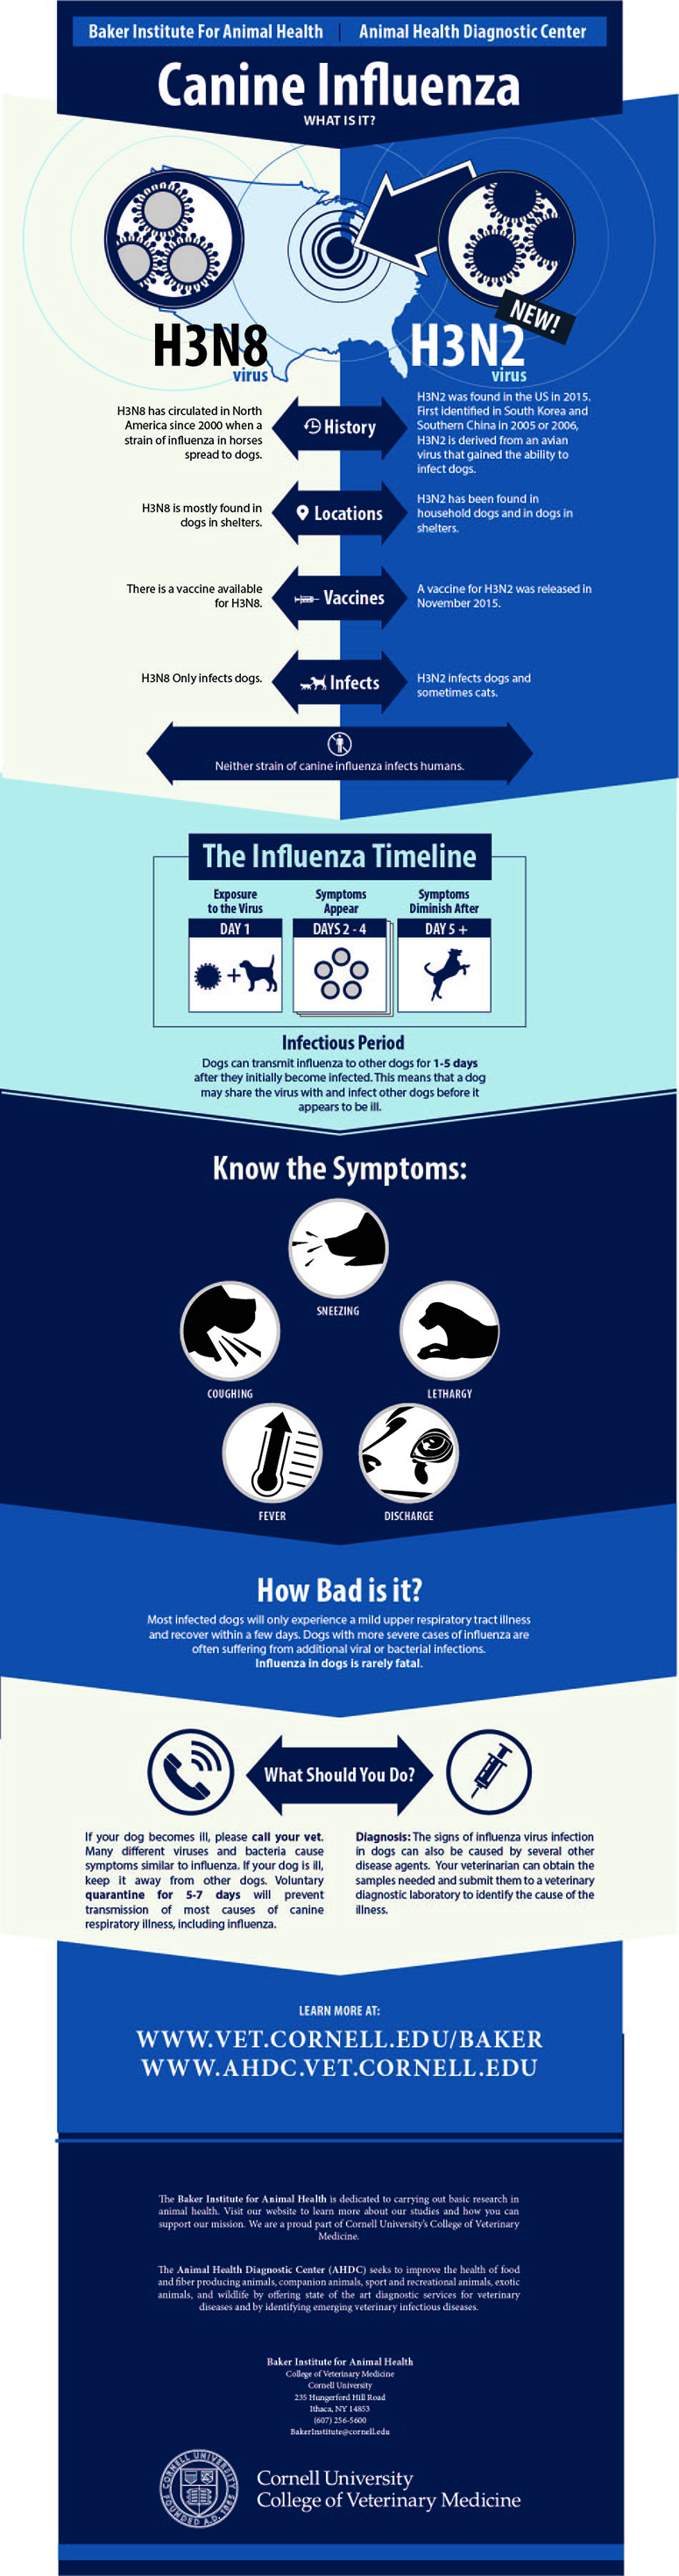 Canine Influenza Infographic